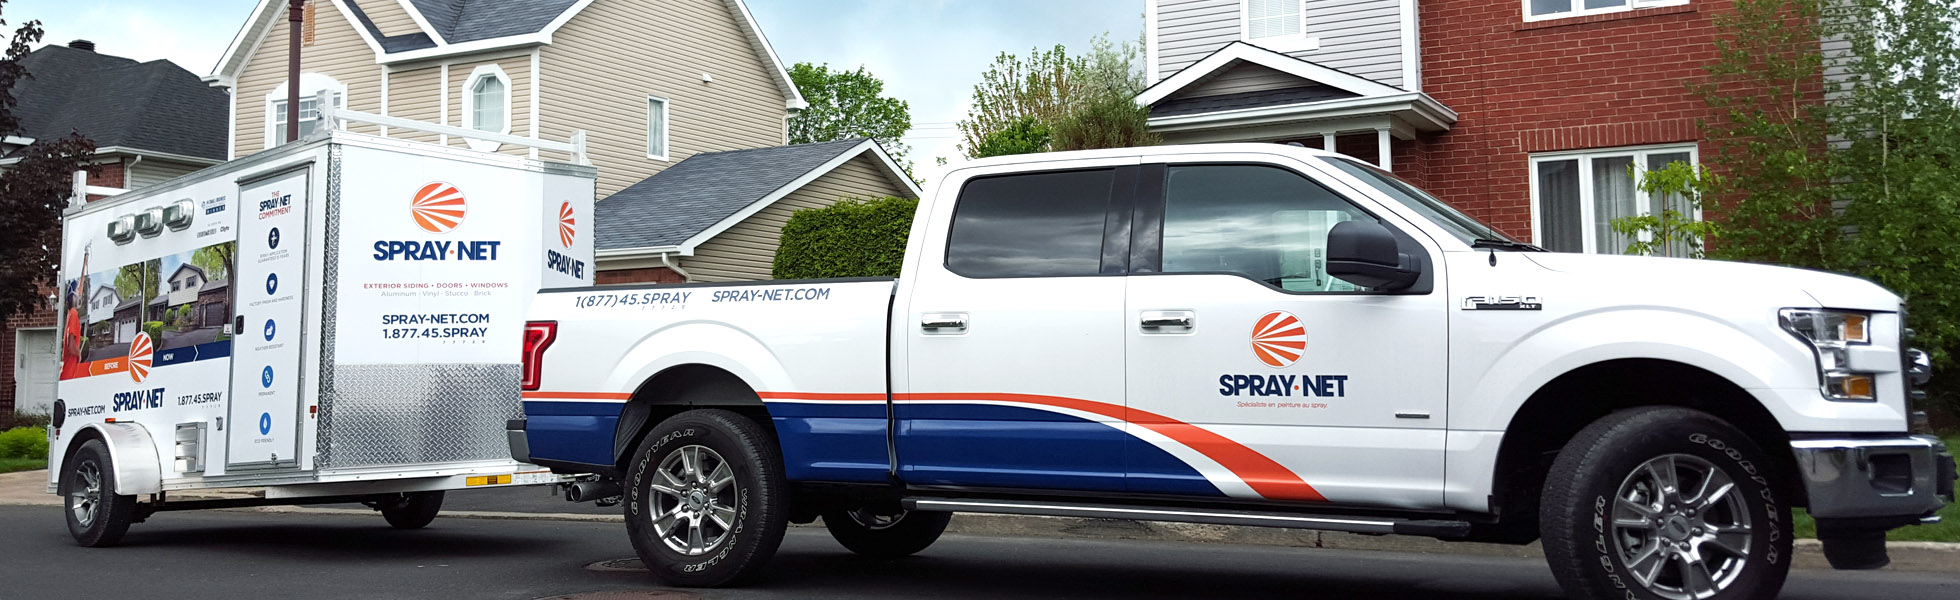 Spray-Net - Home-Improvement Franchise